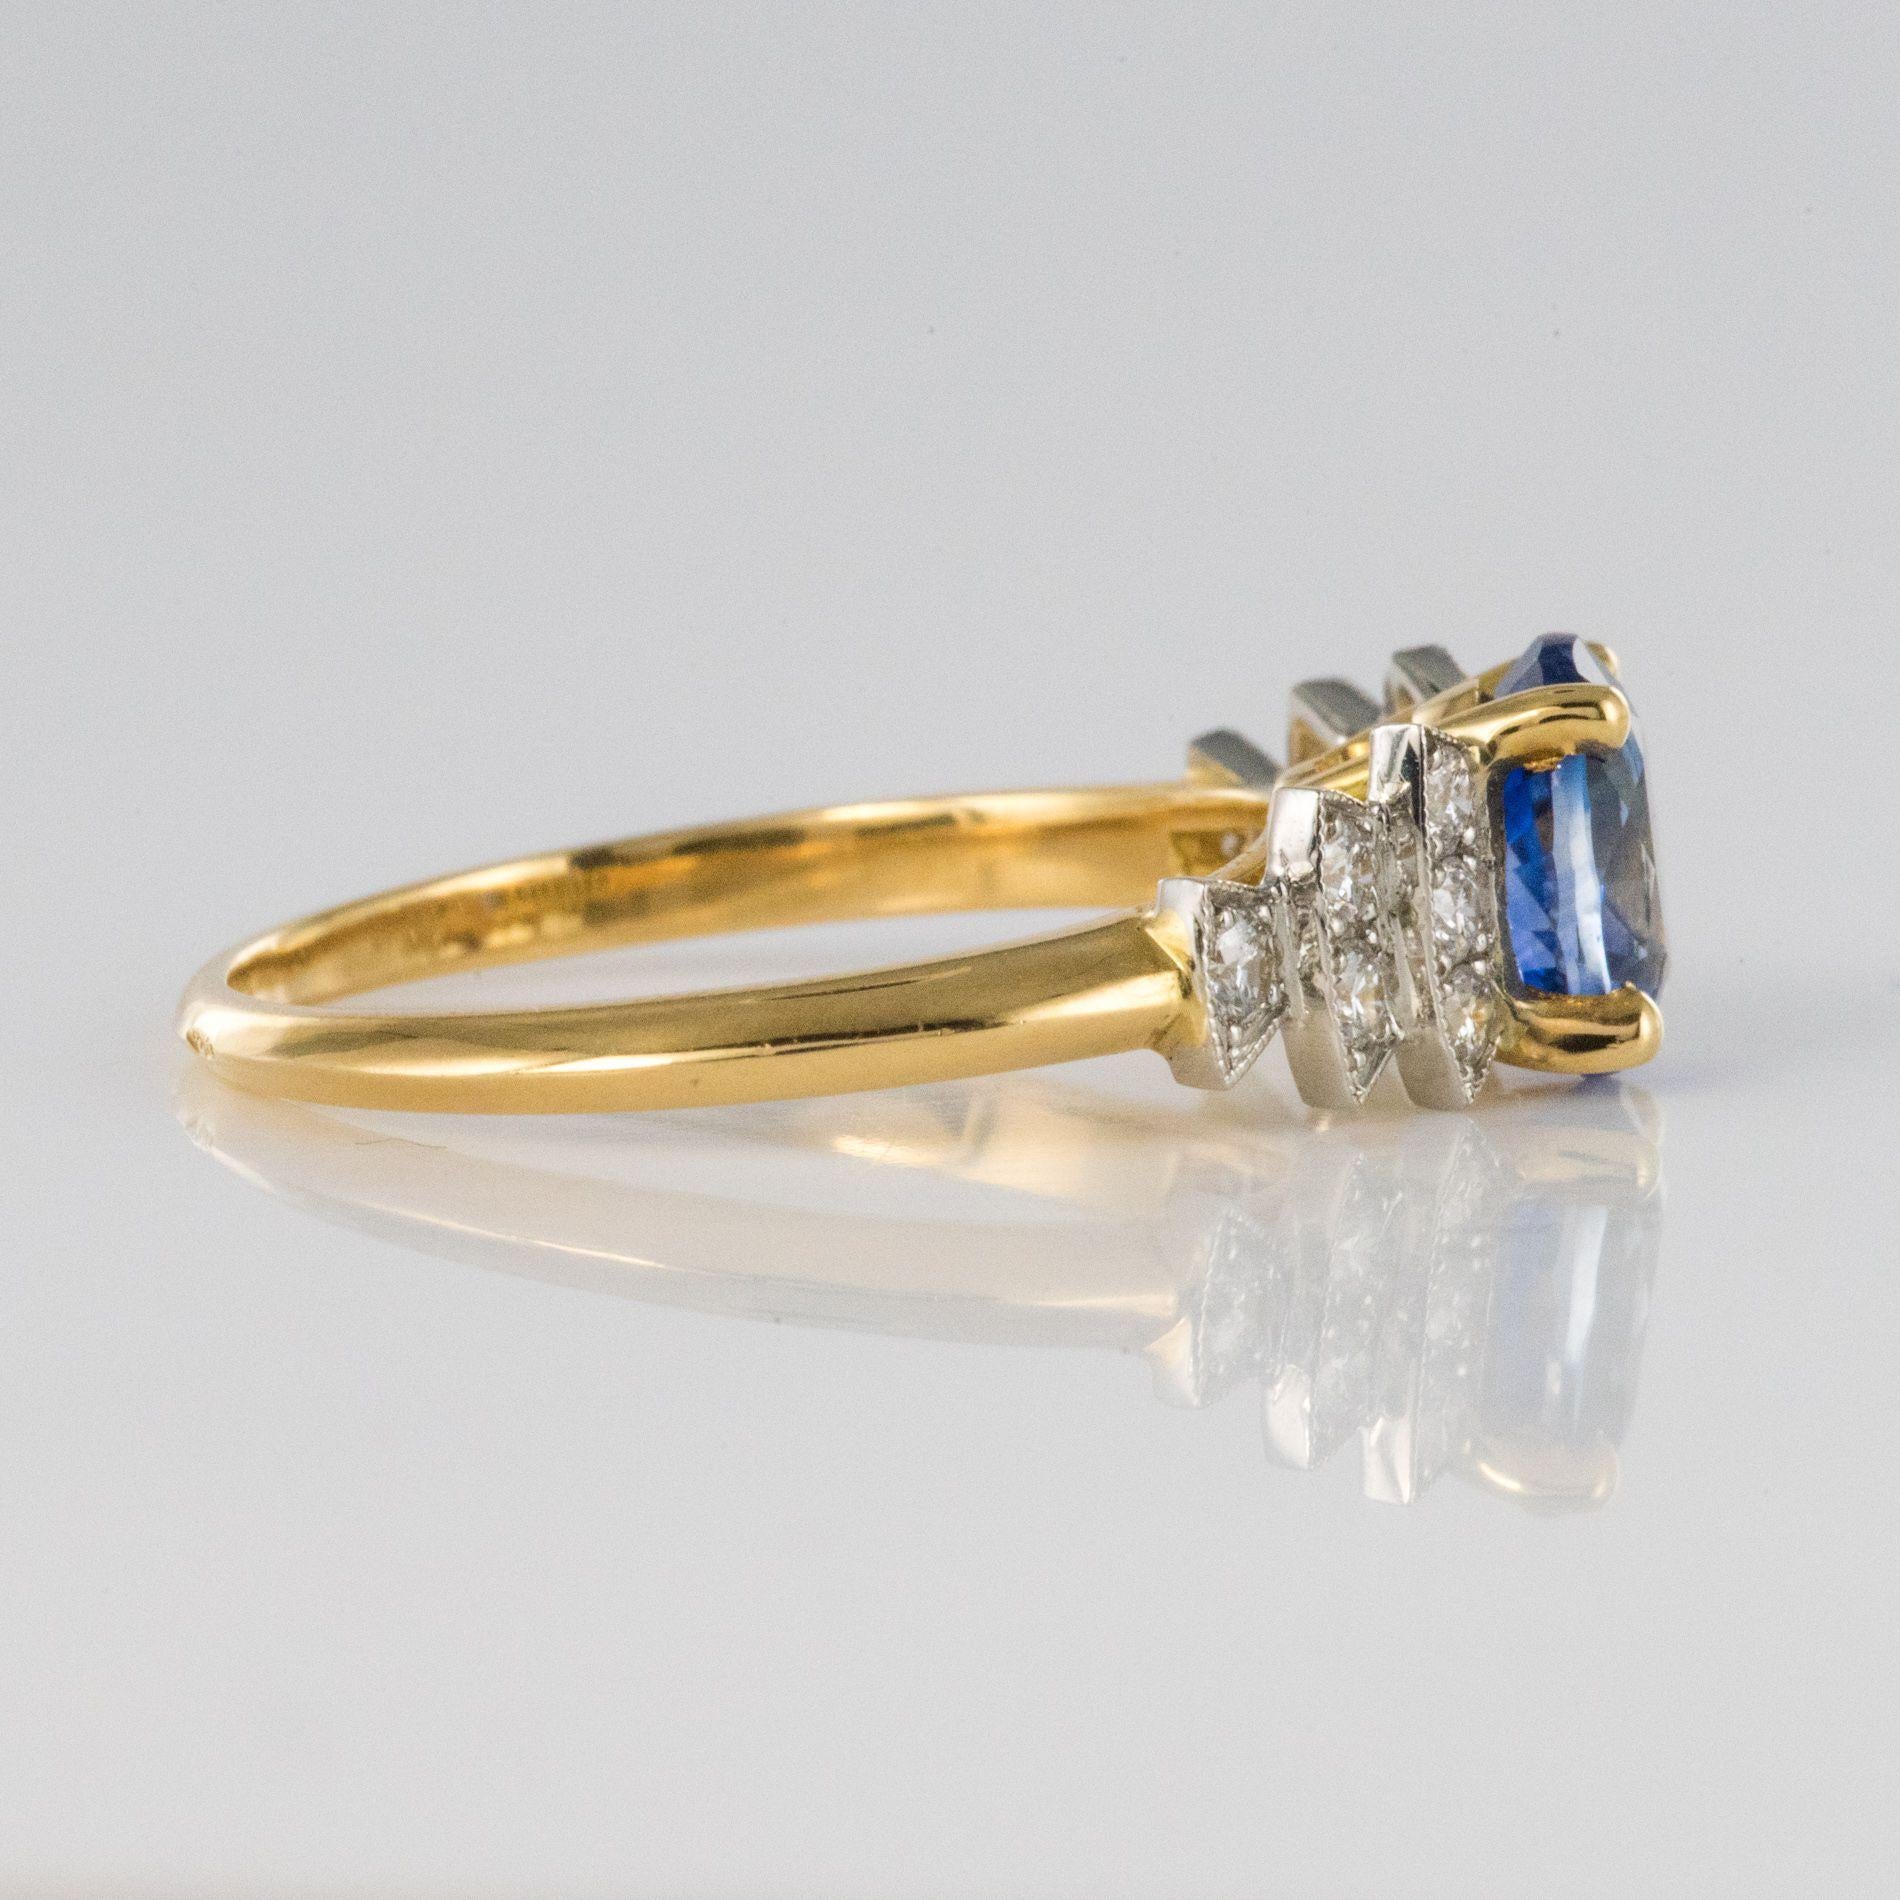 French Art Deco Style Sapphire Diamonds Ring 9